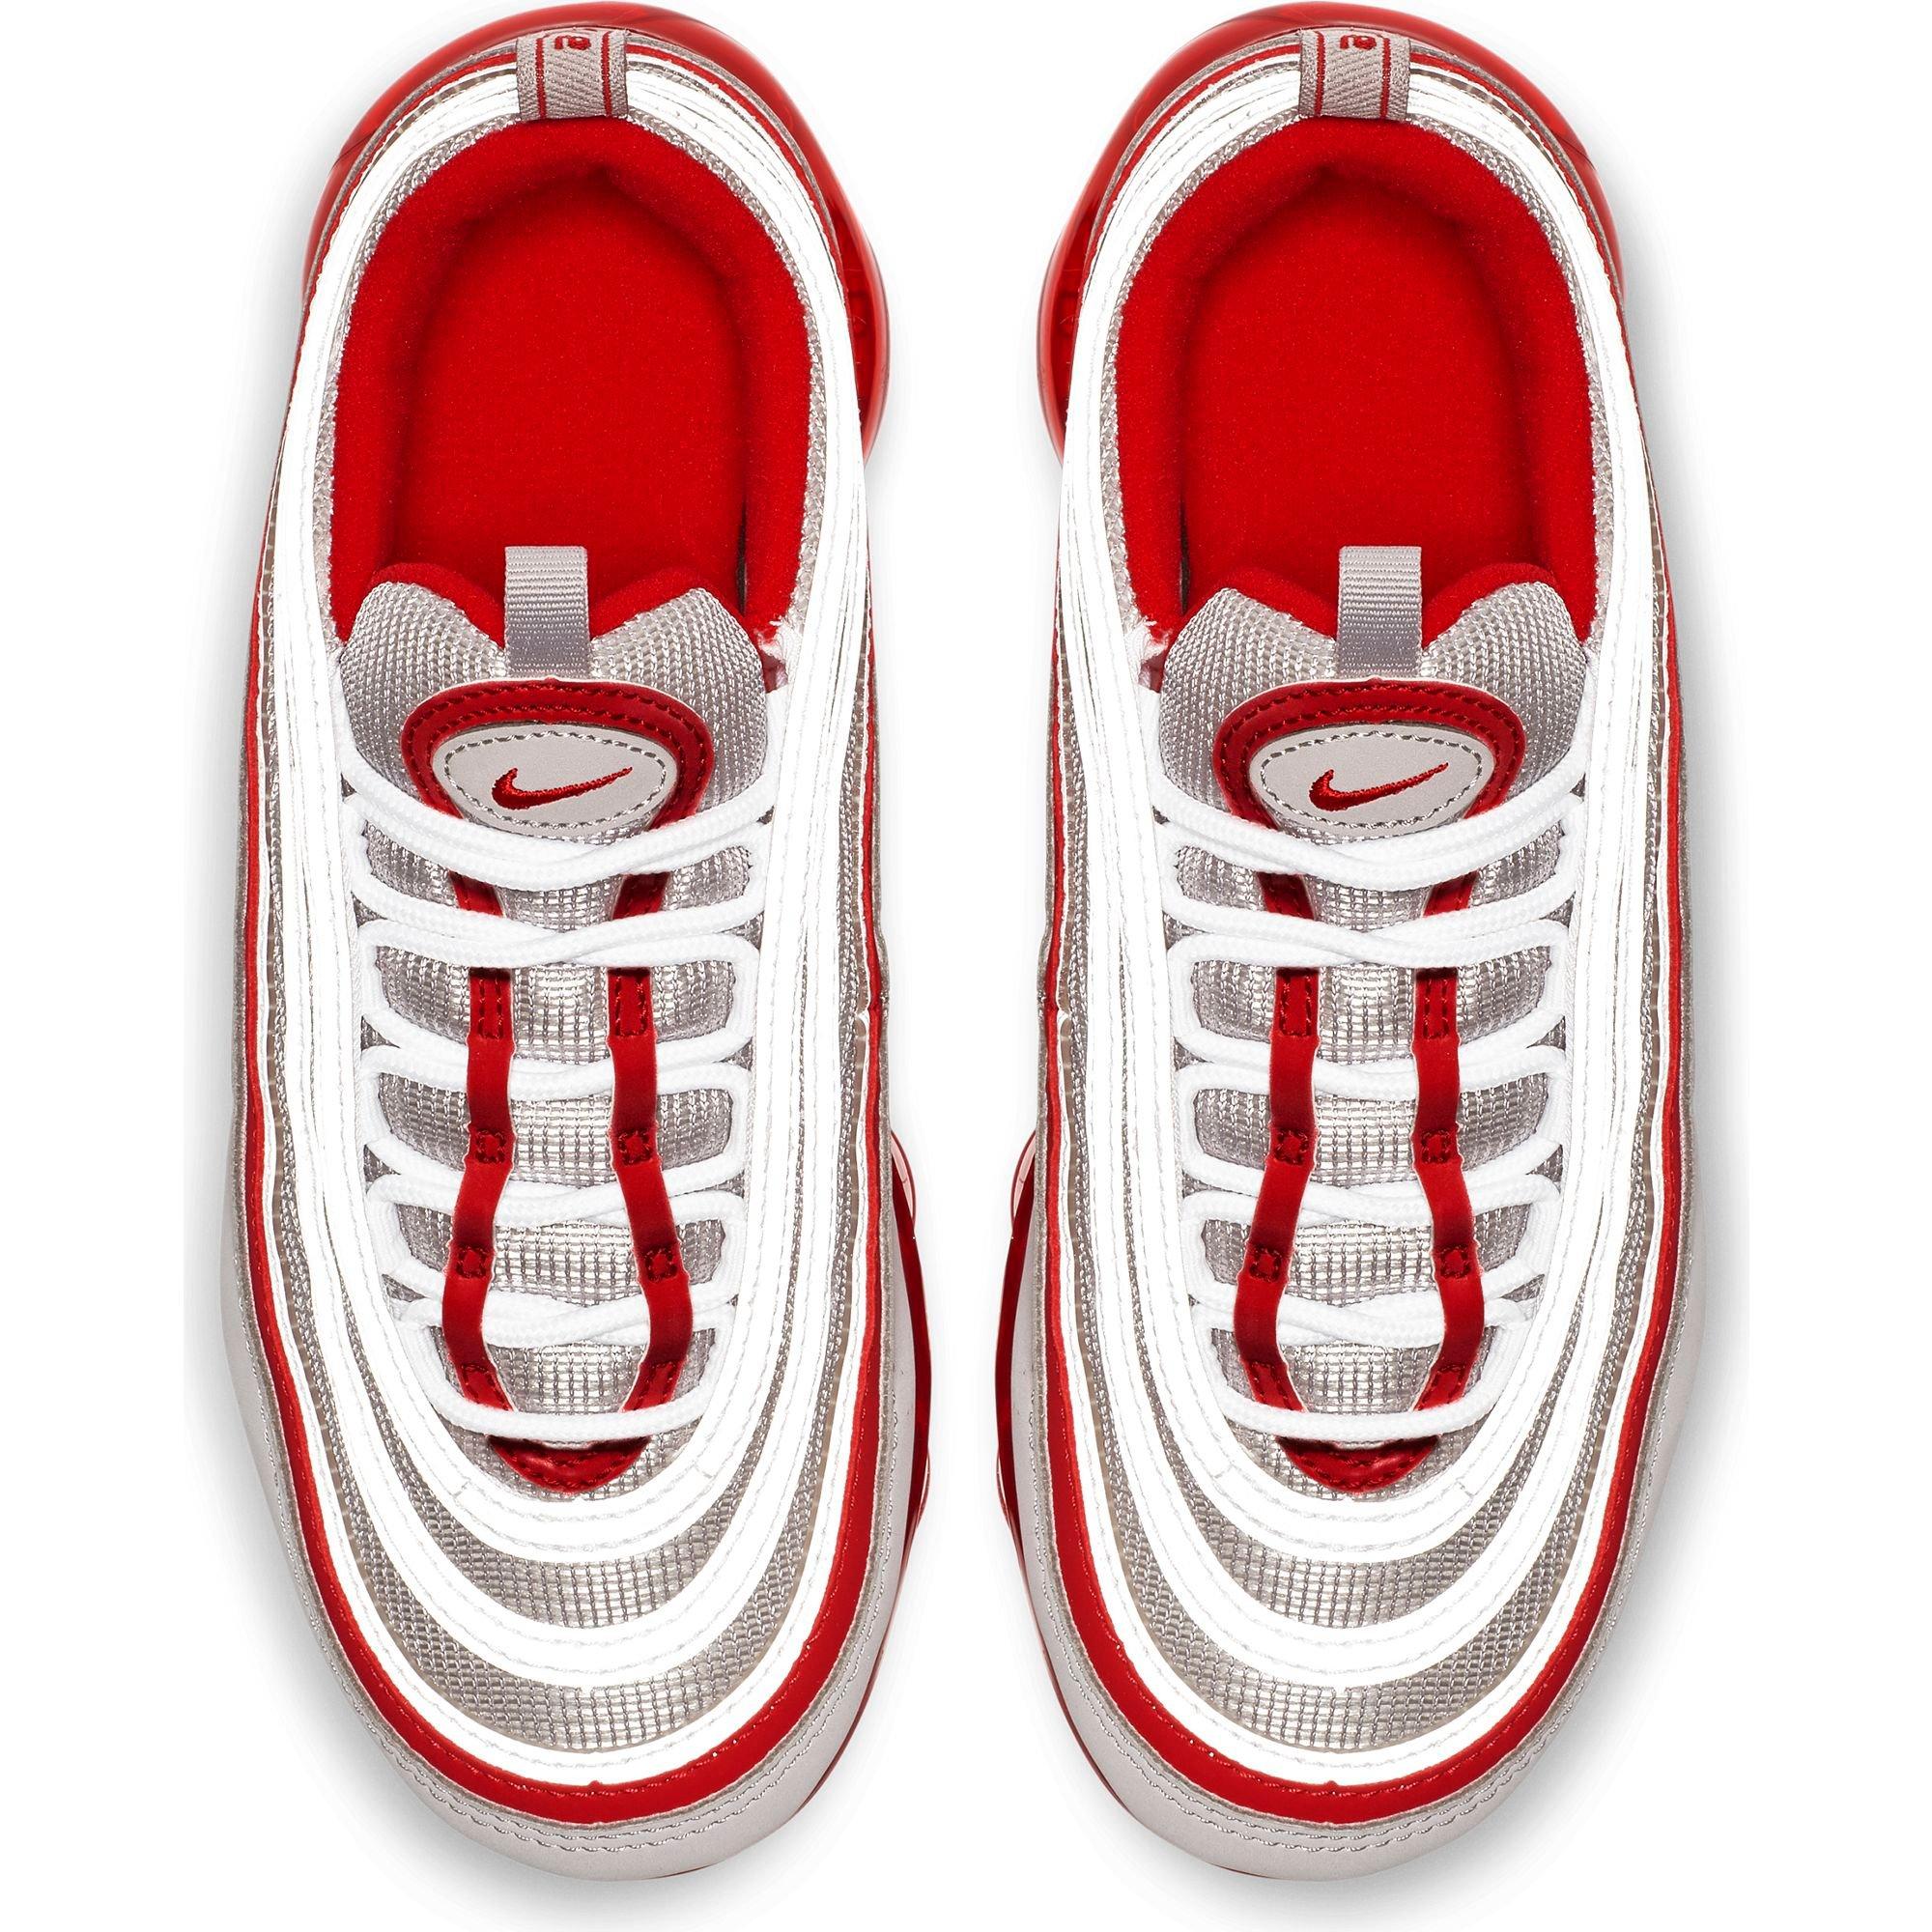 Nike Vapormax 97 men s shoes used to buy eBay